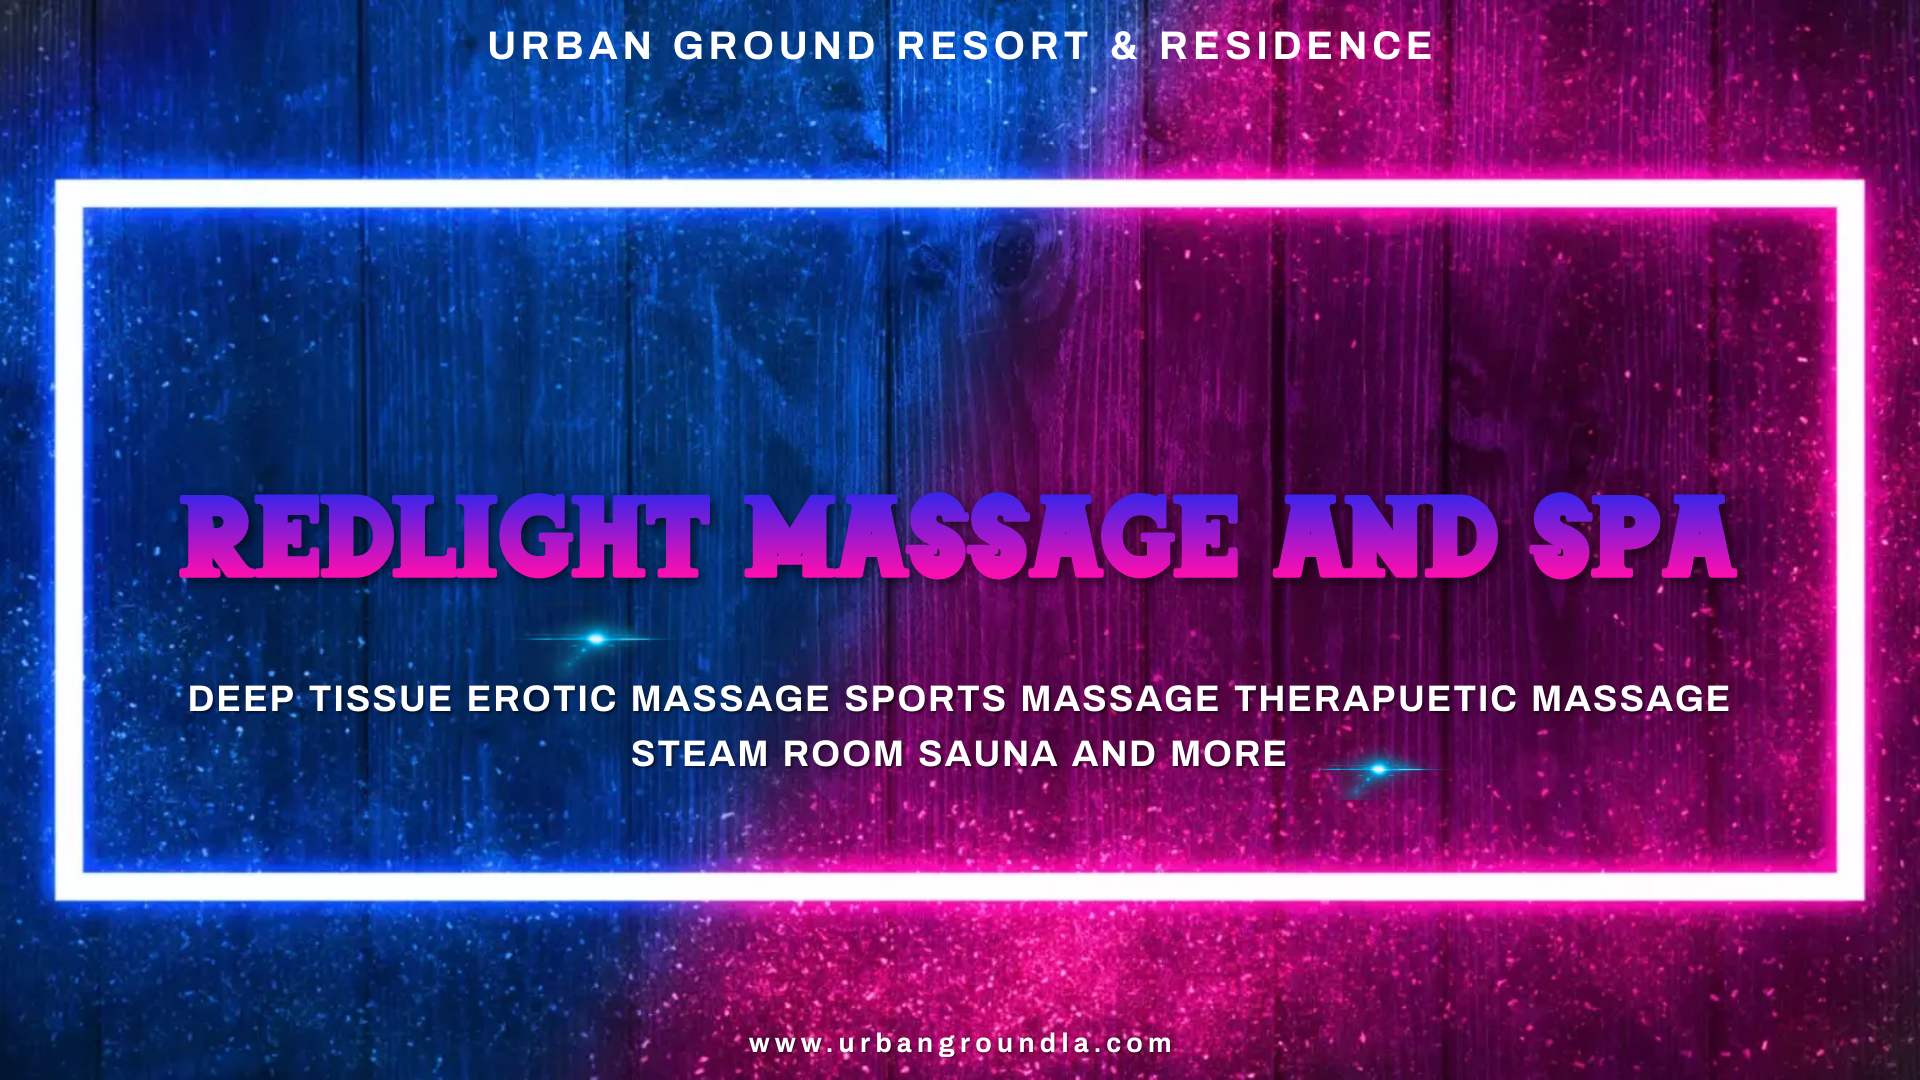 Redlight Massage and Spa Urban Ground Resort